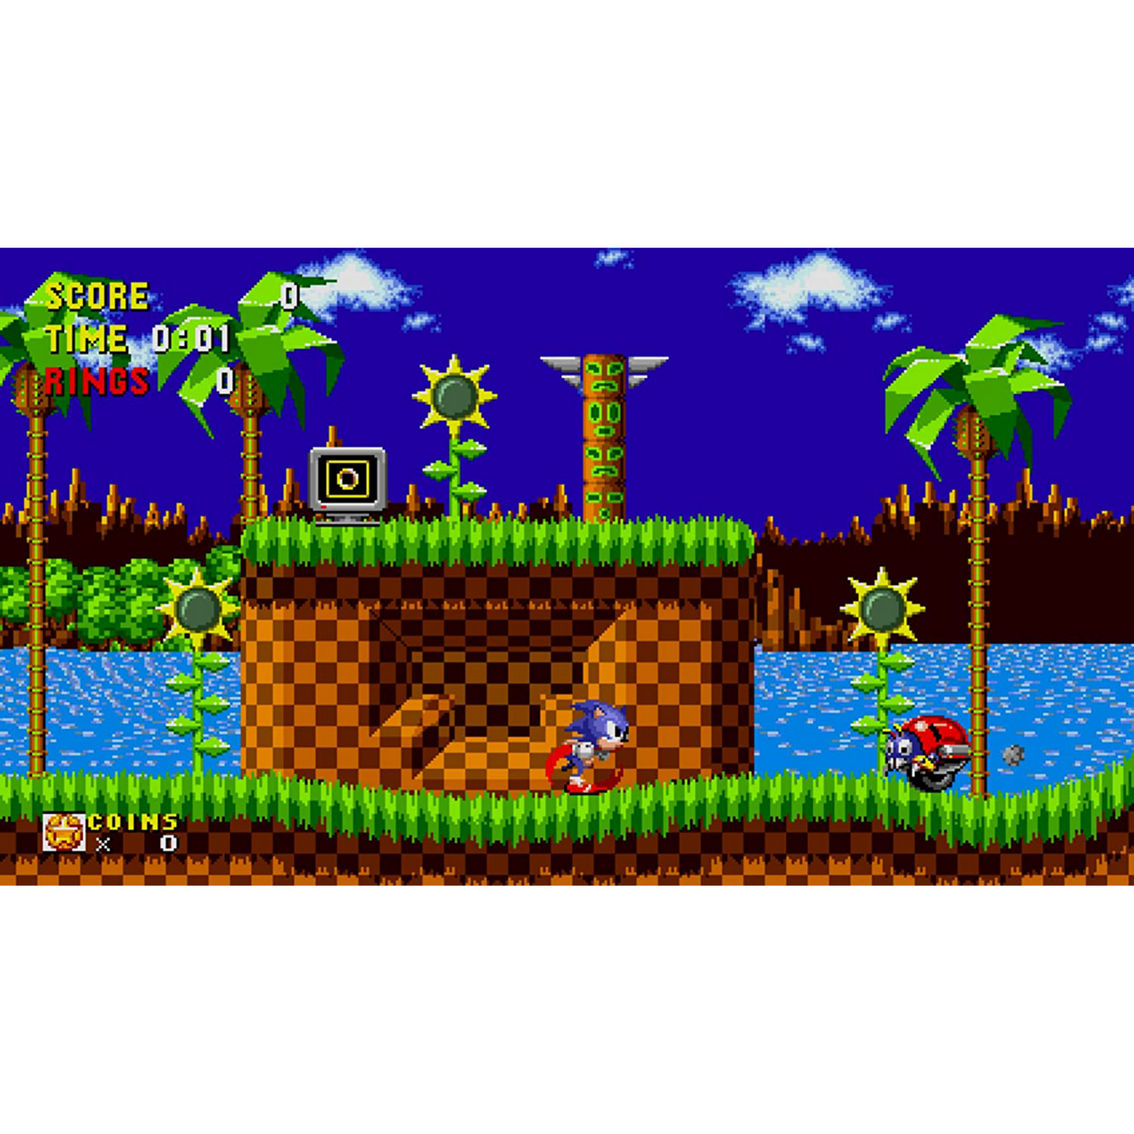 Sonic the Hedgehog 2 Game Boy Advance Box Art Cover by Ervo